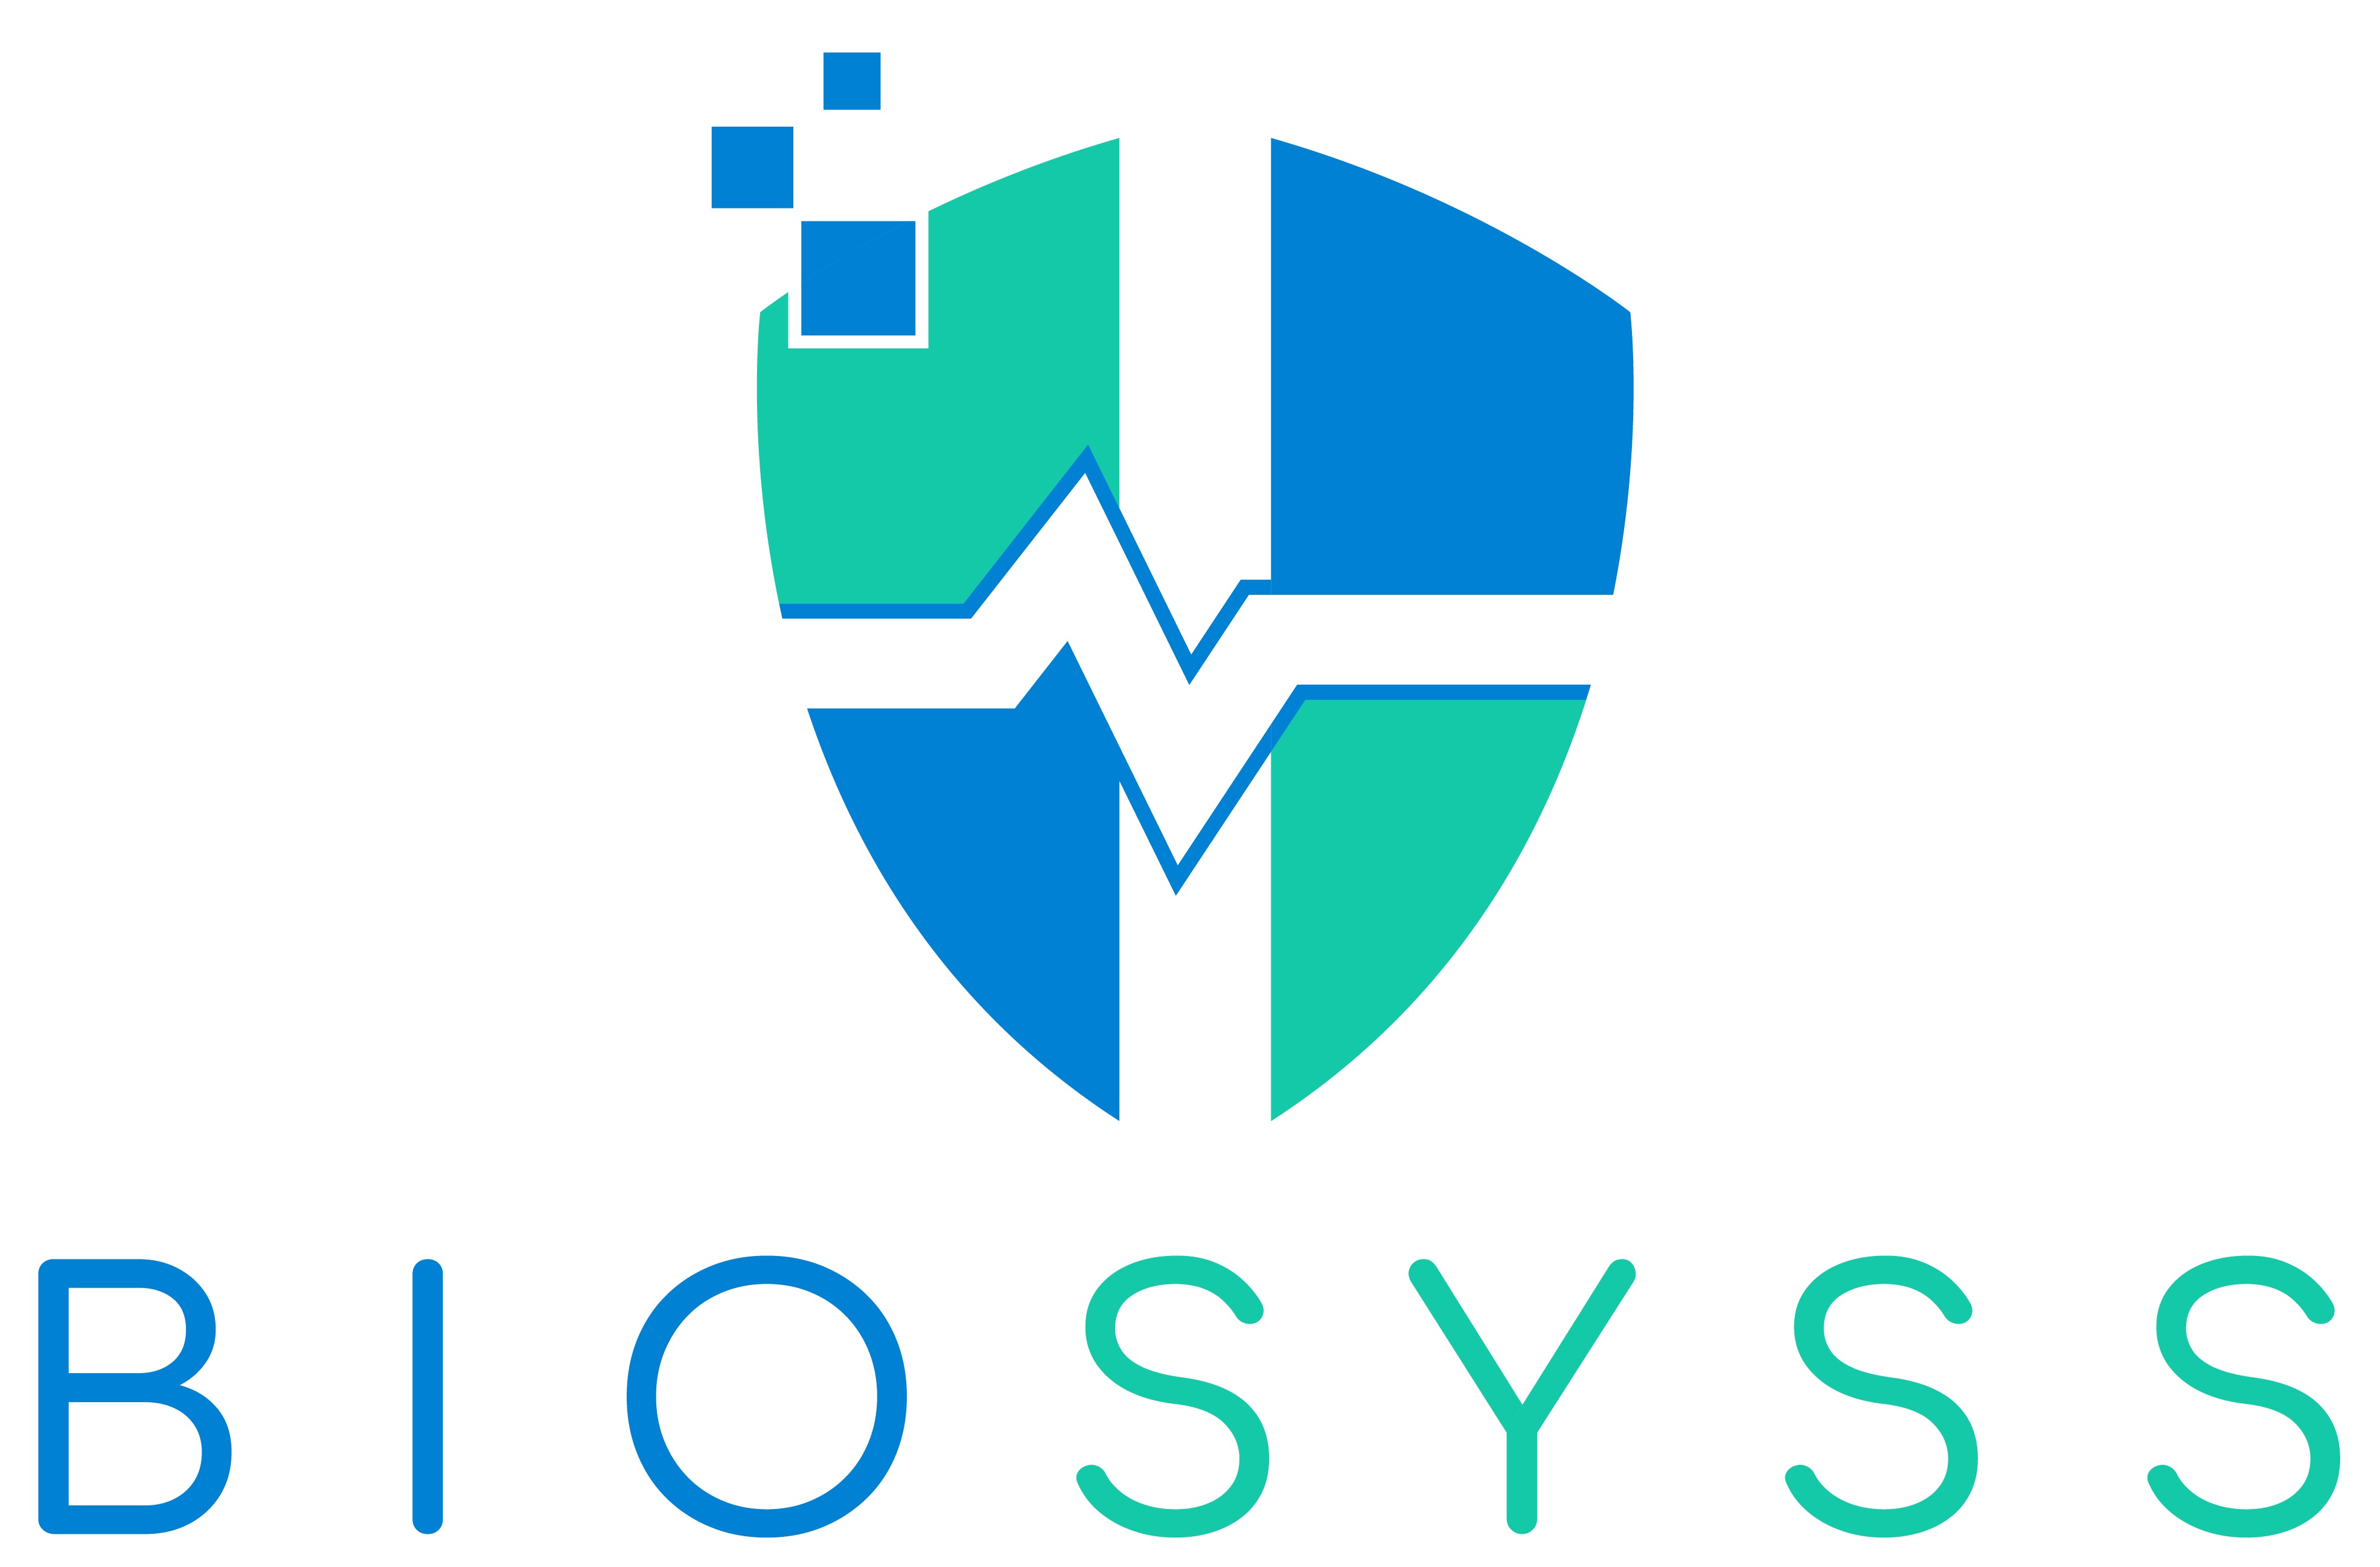 BioSyss